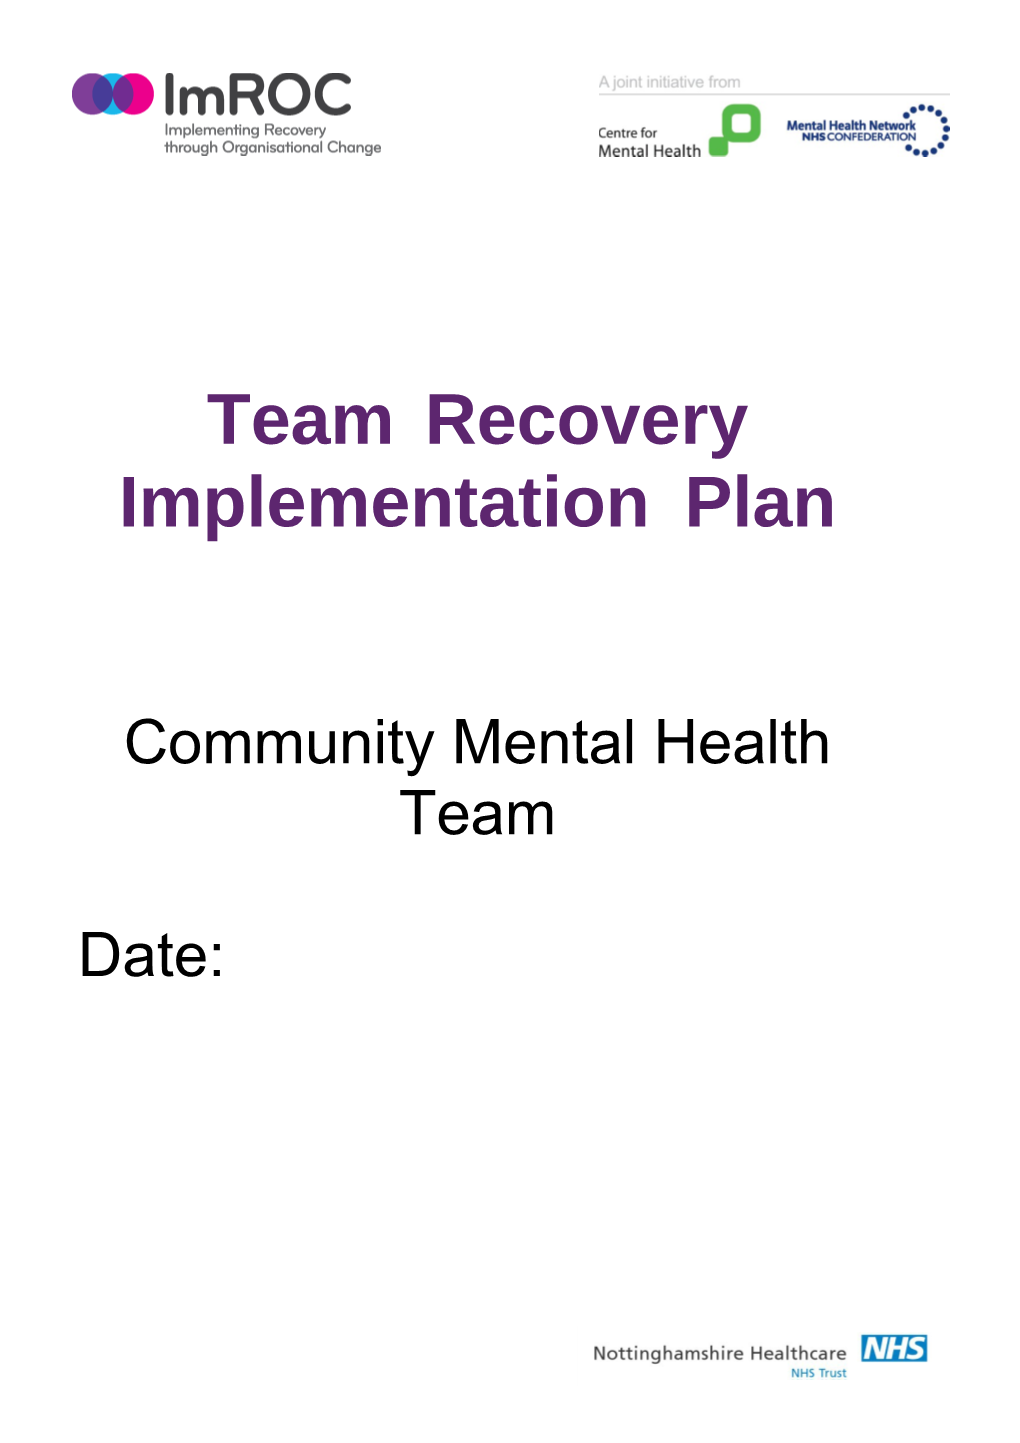 Community Mental Health Team